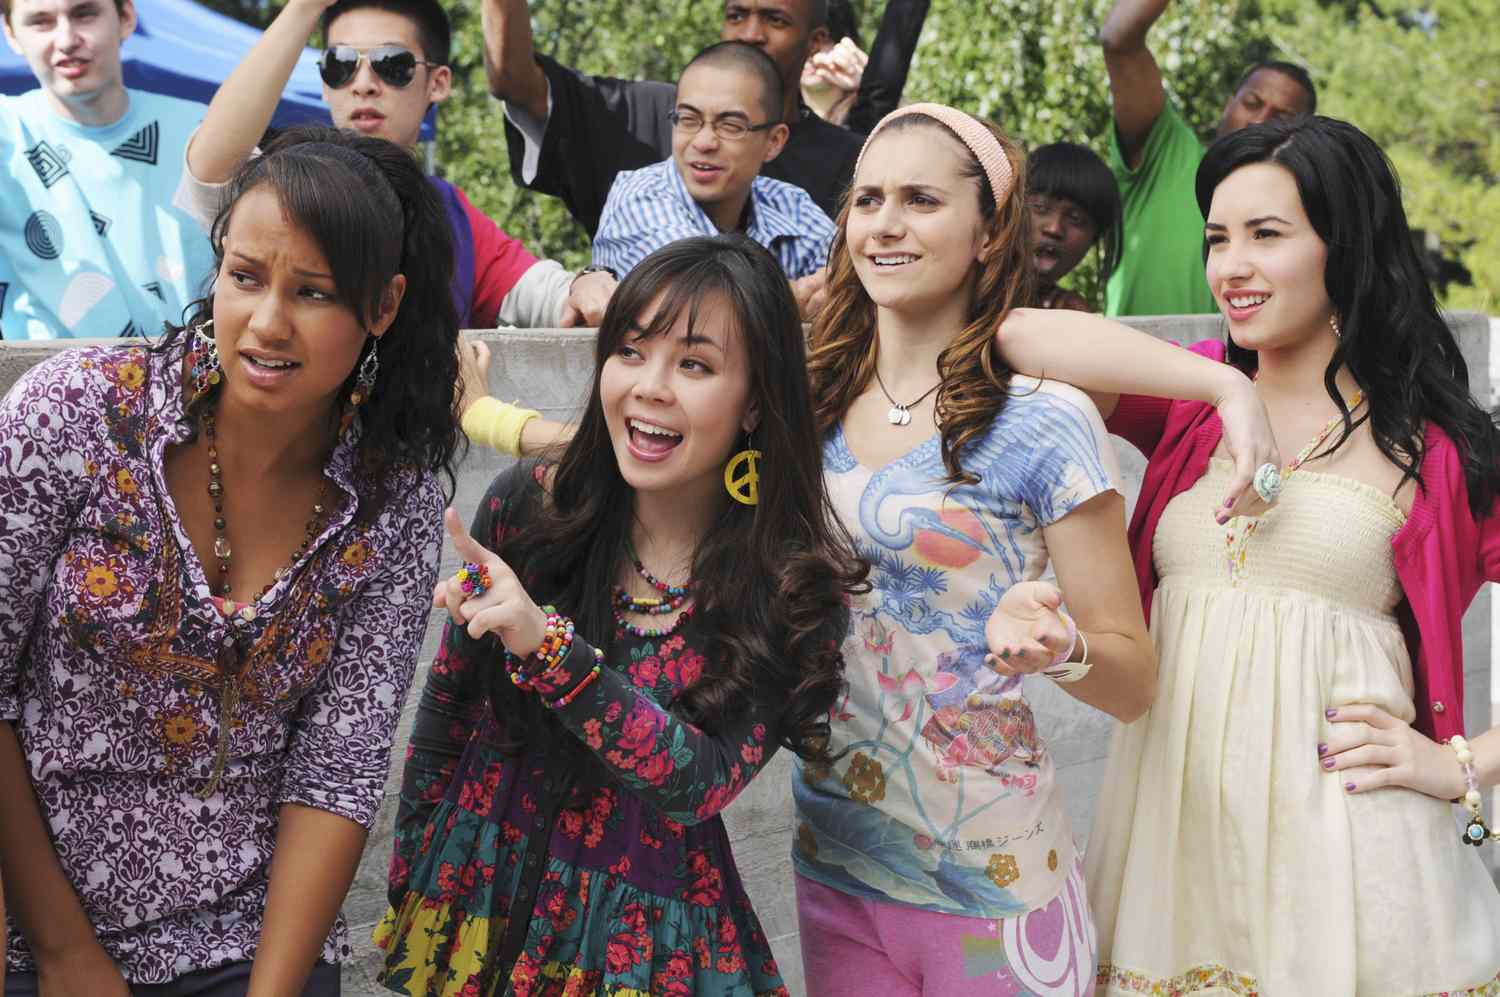 Disney Channel's "Camp Rock 2: The Final Jam"